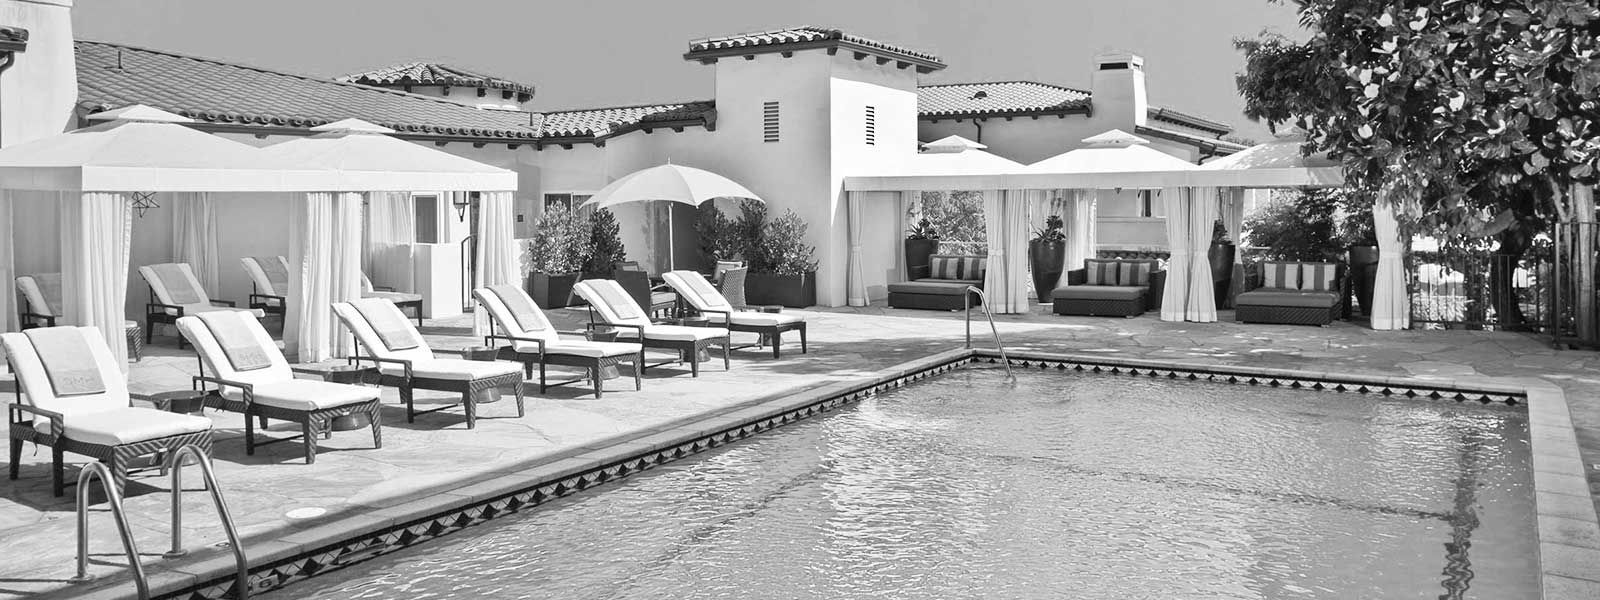 Villa Pool in Black and White